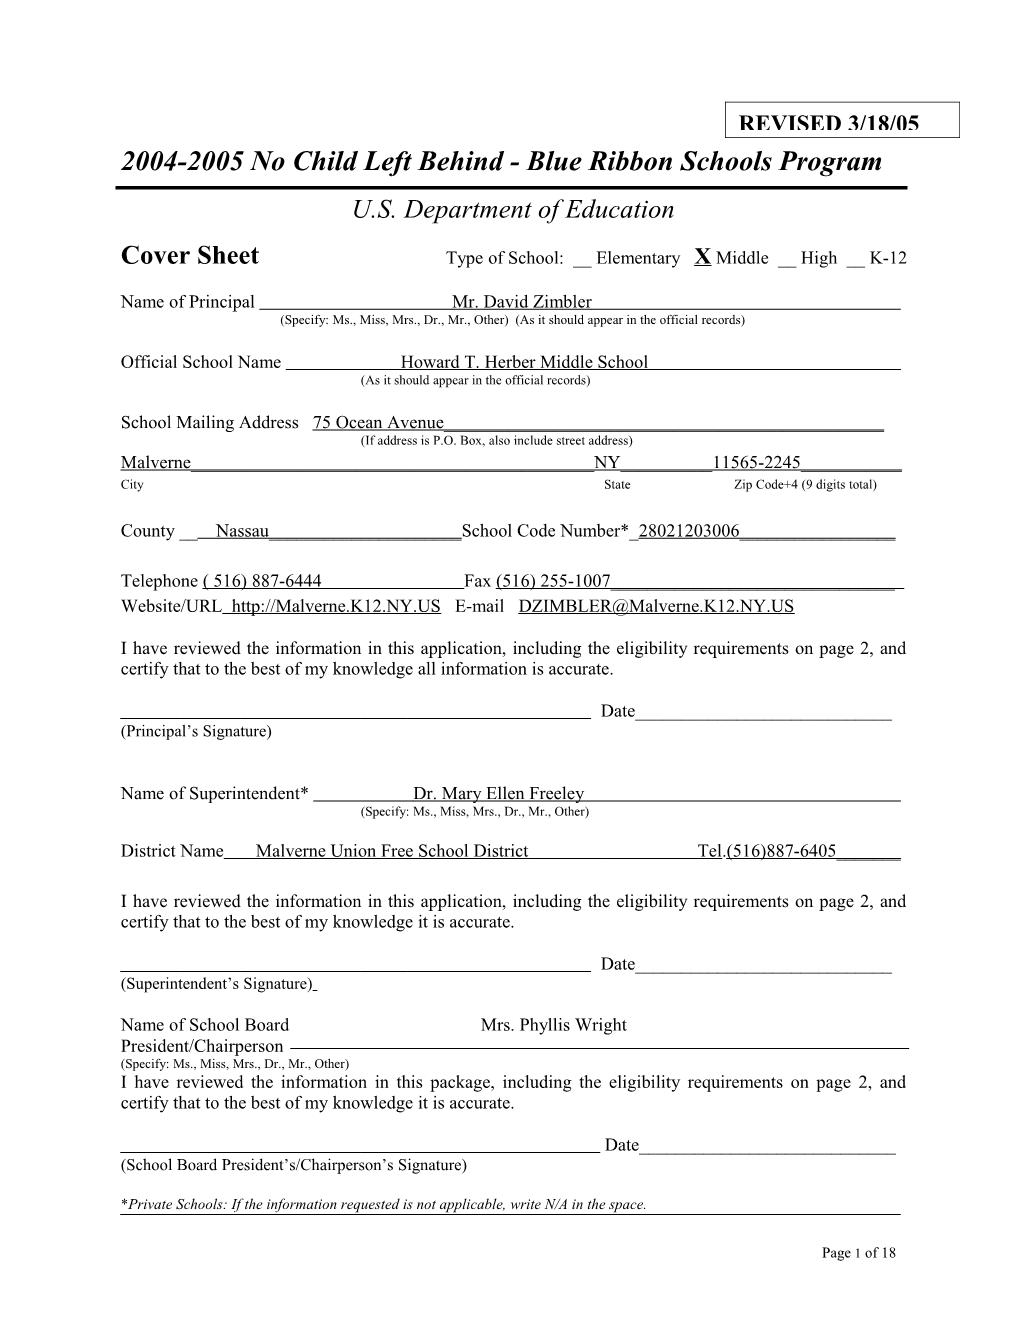 Howard T. Herber Middle School Application: 2004-2005, No Child Left Behind - Blue Ribbon